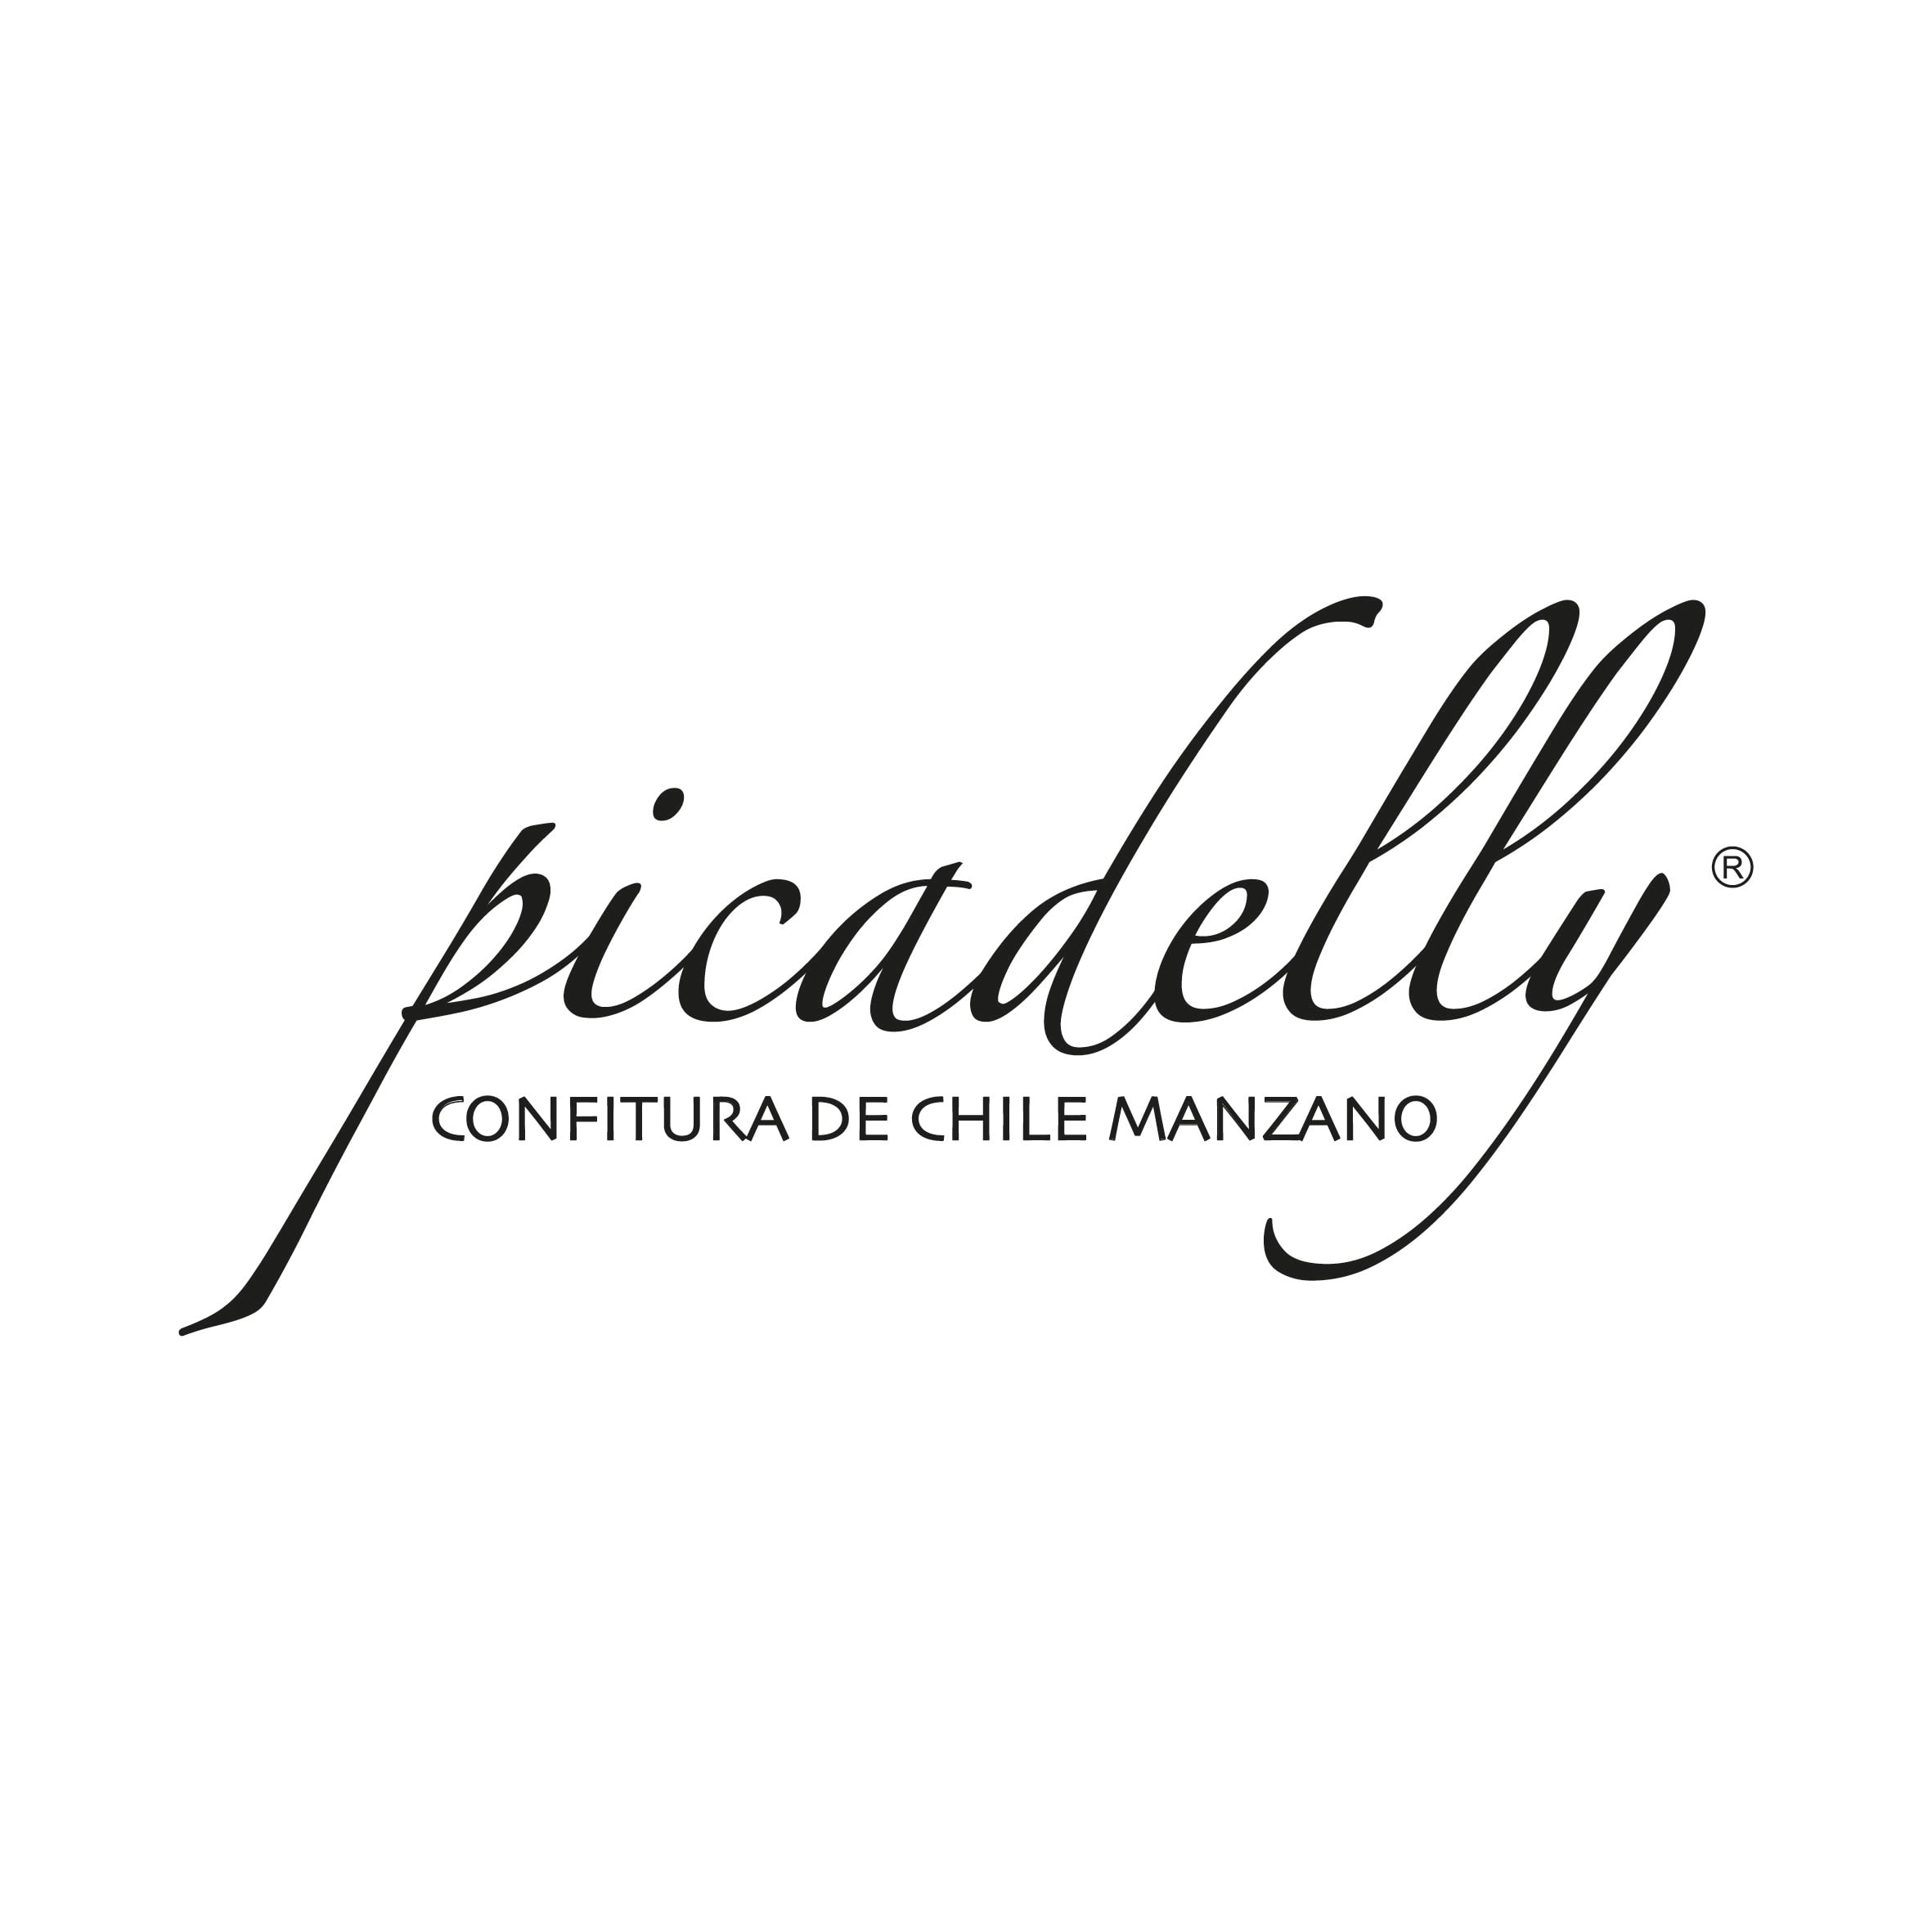 Picadelly